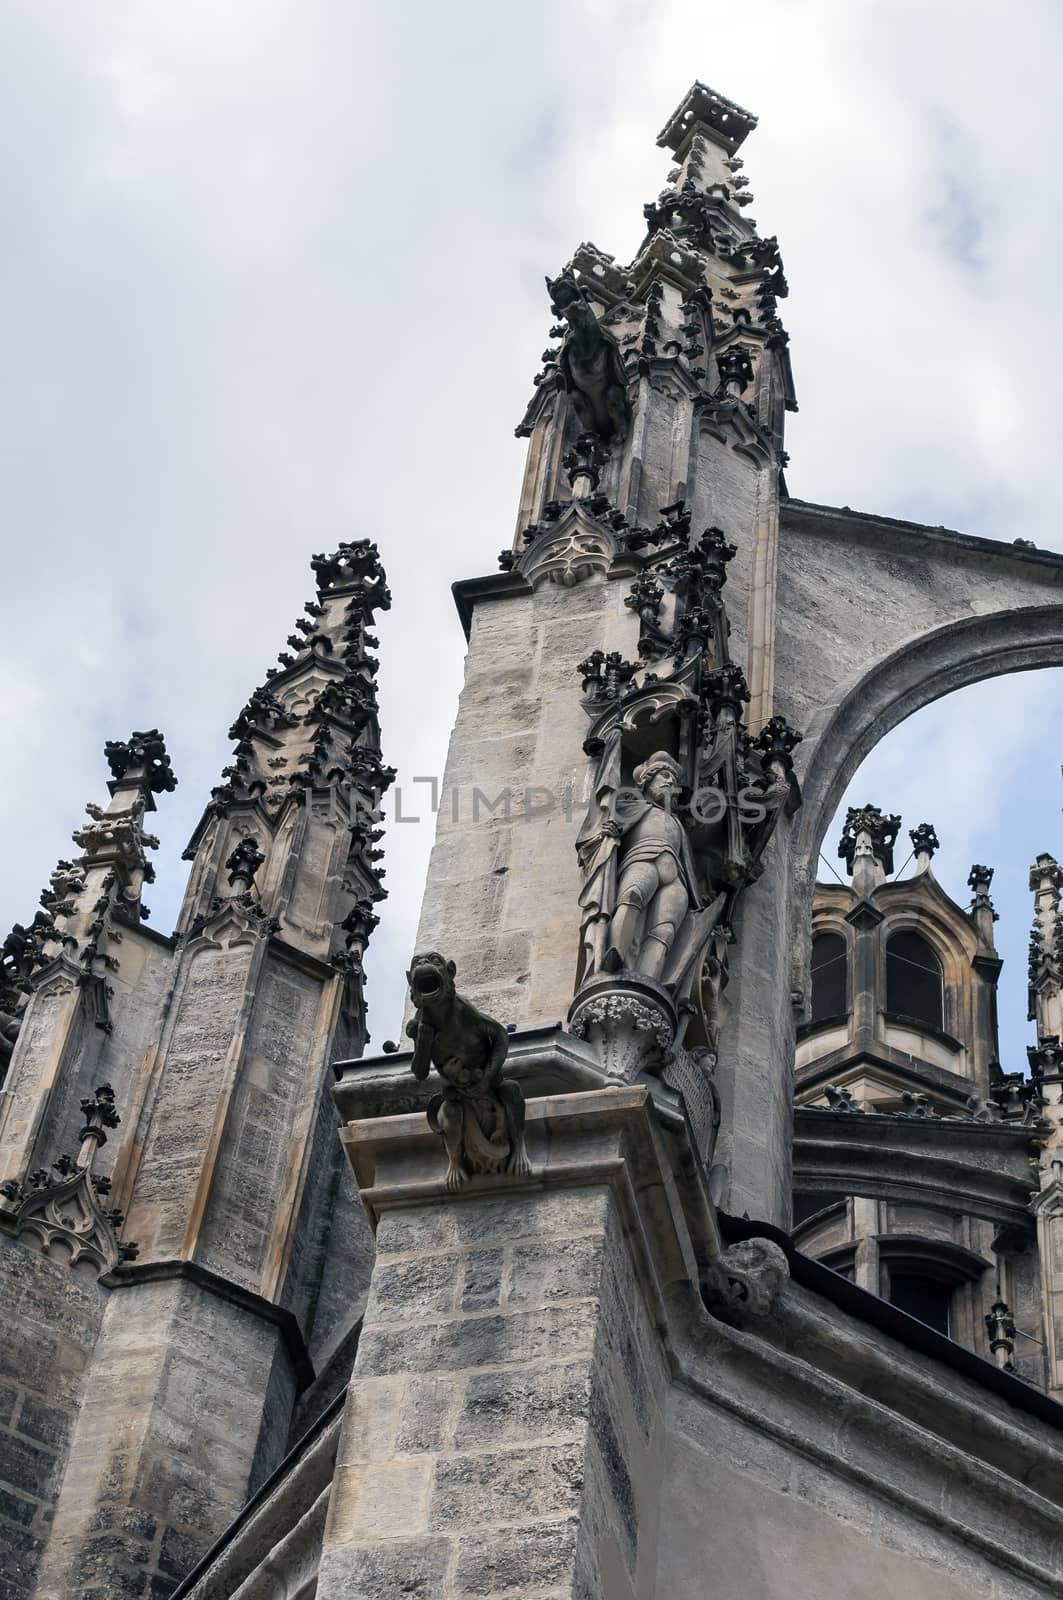 St Vitus Cathedral, Prague. by FER737NG